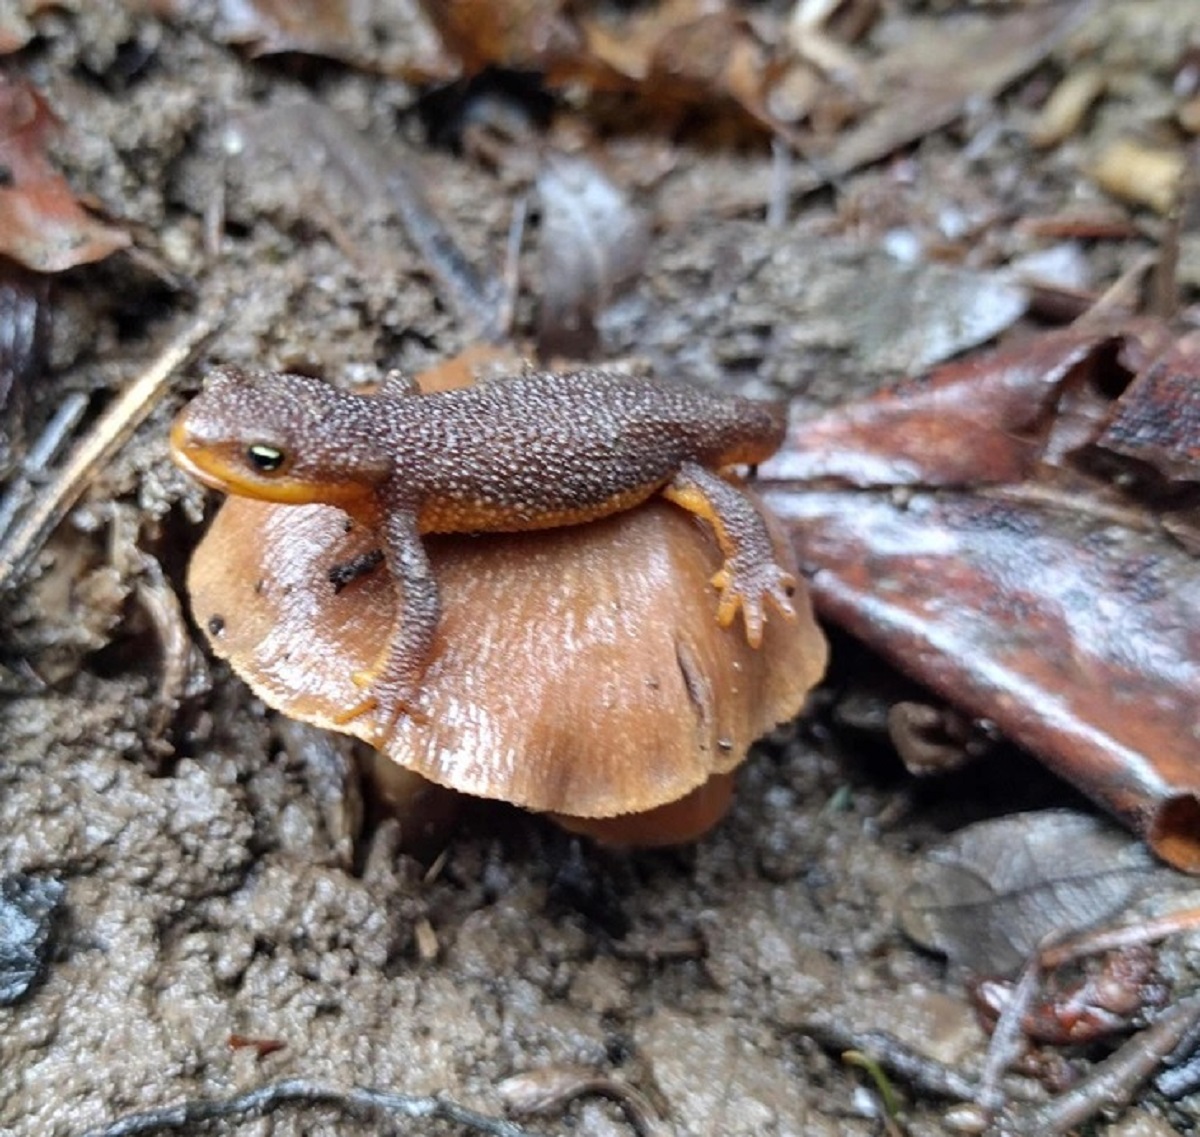 “Found a salamander on a mushroom on my hike.”